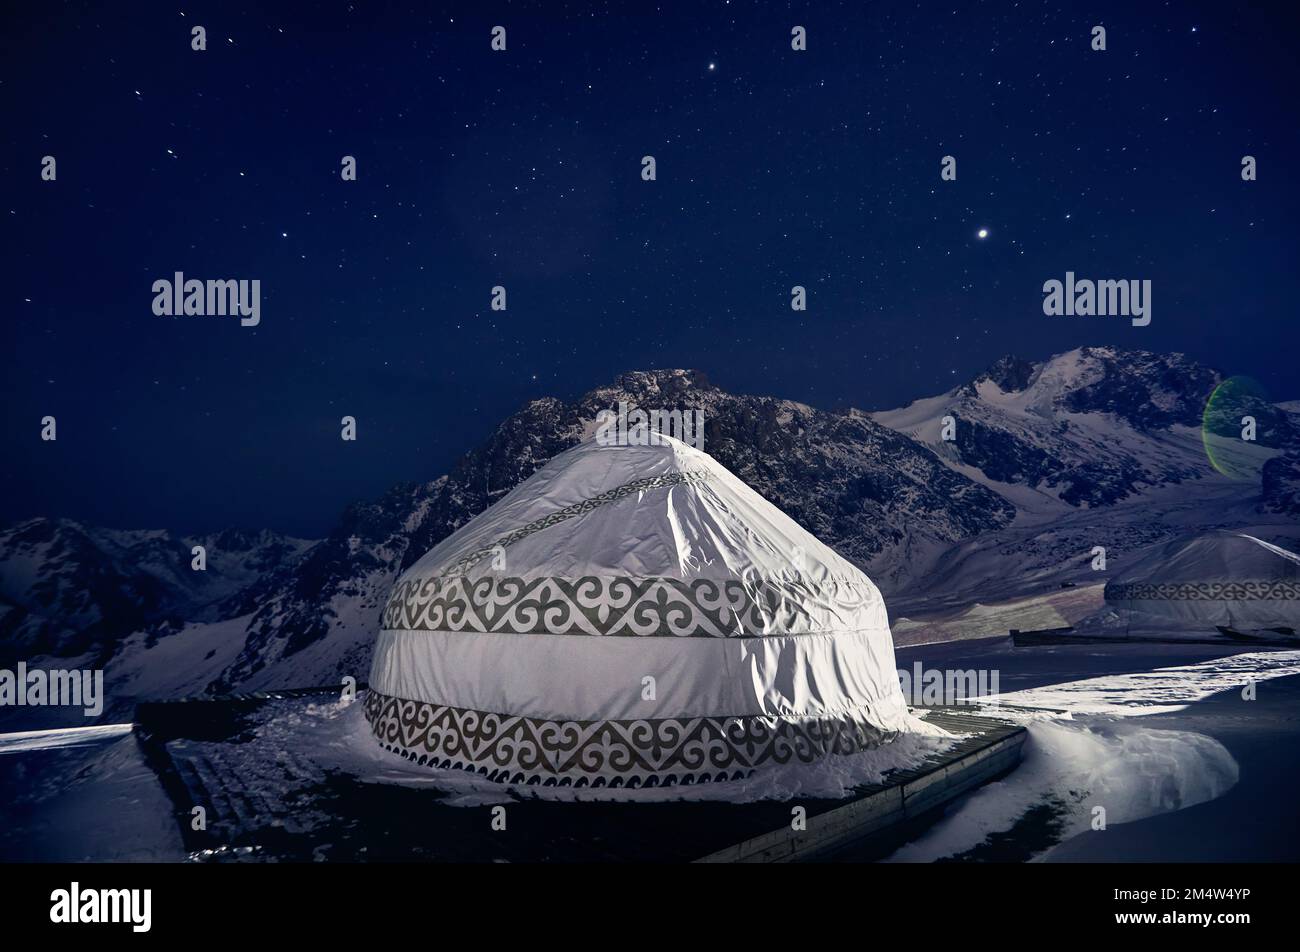 Yurt or yurta nomadic house at Ski resort Shymbulak in Almaty, Kazakhstan. Winter night astrophotography with stars against mountain peak Stock Photo